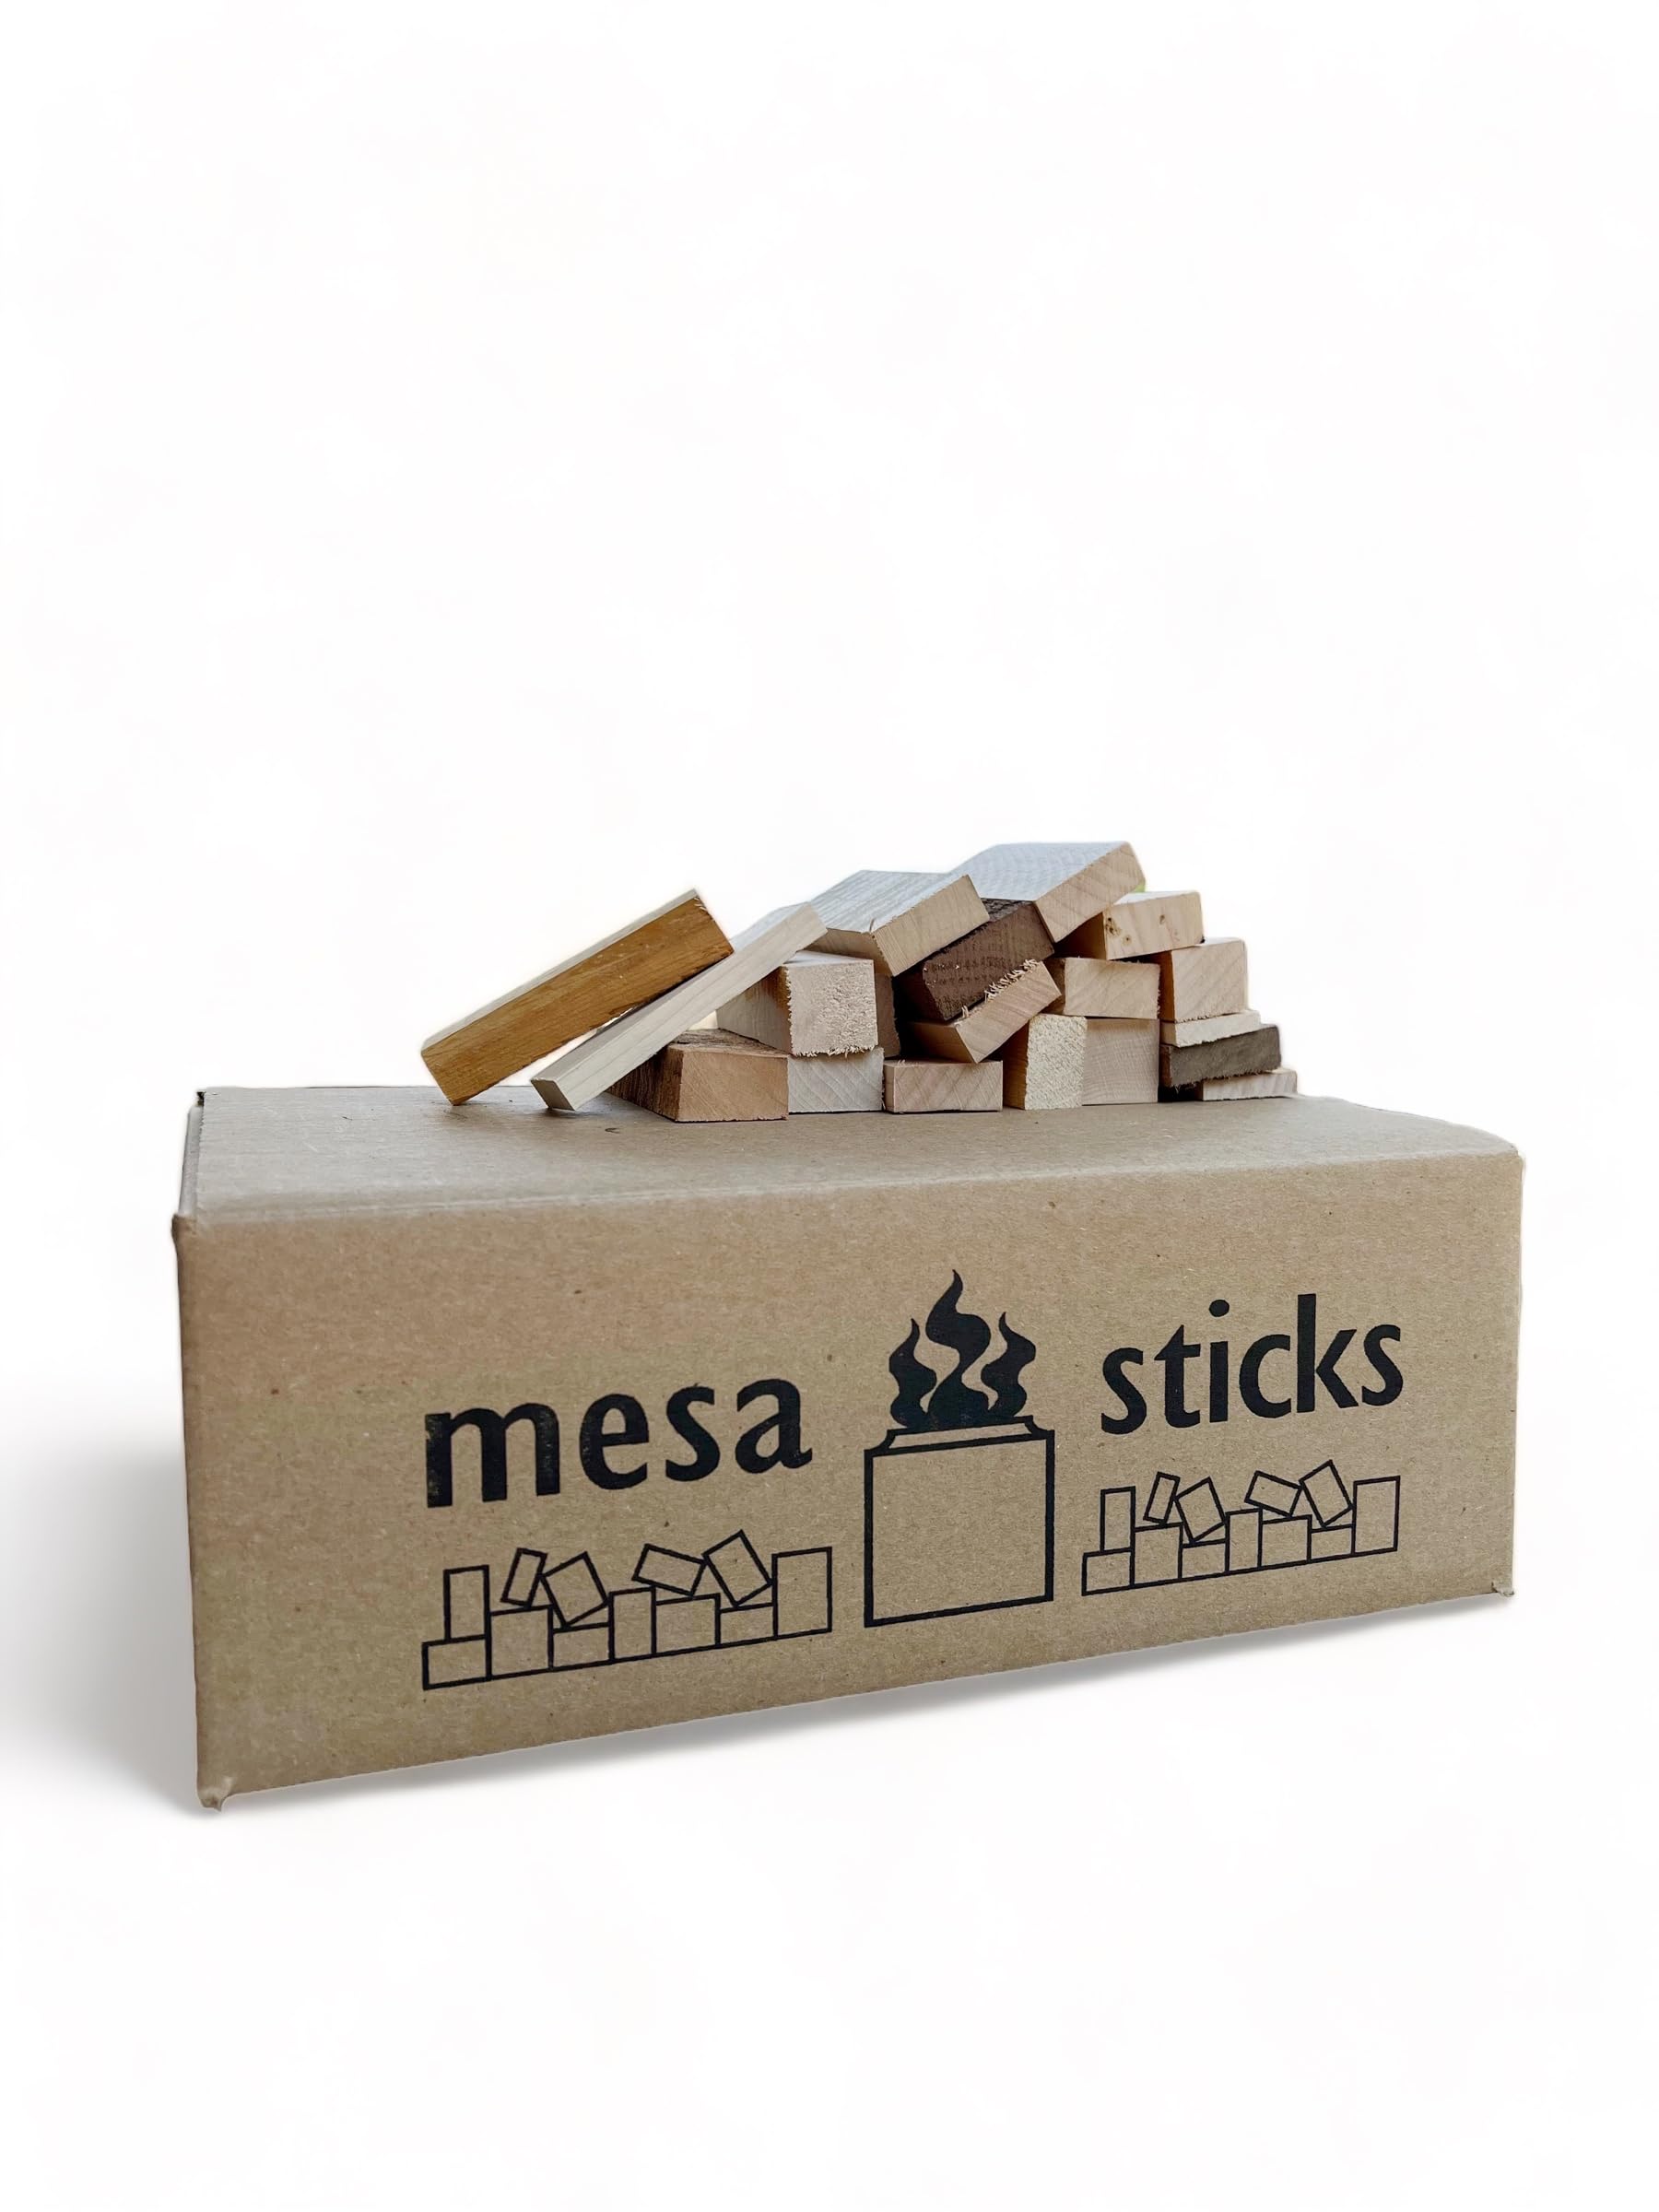 MESA Sticks: Kiln Dried Hardwood Firewood Oak Cherry Maple Walnut - 3.5" Lengths Great for Solo Stove Mesa Tabletop Fire Pit (11 Pounds)